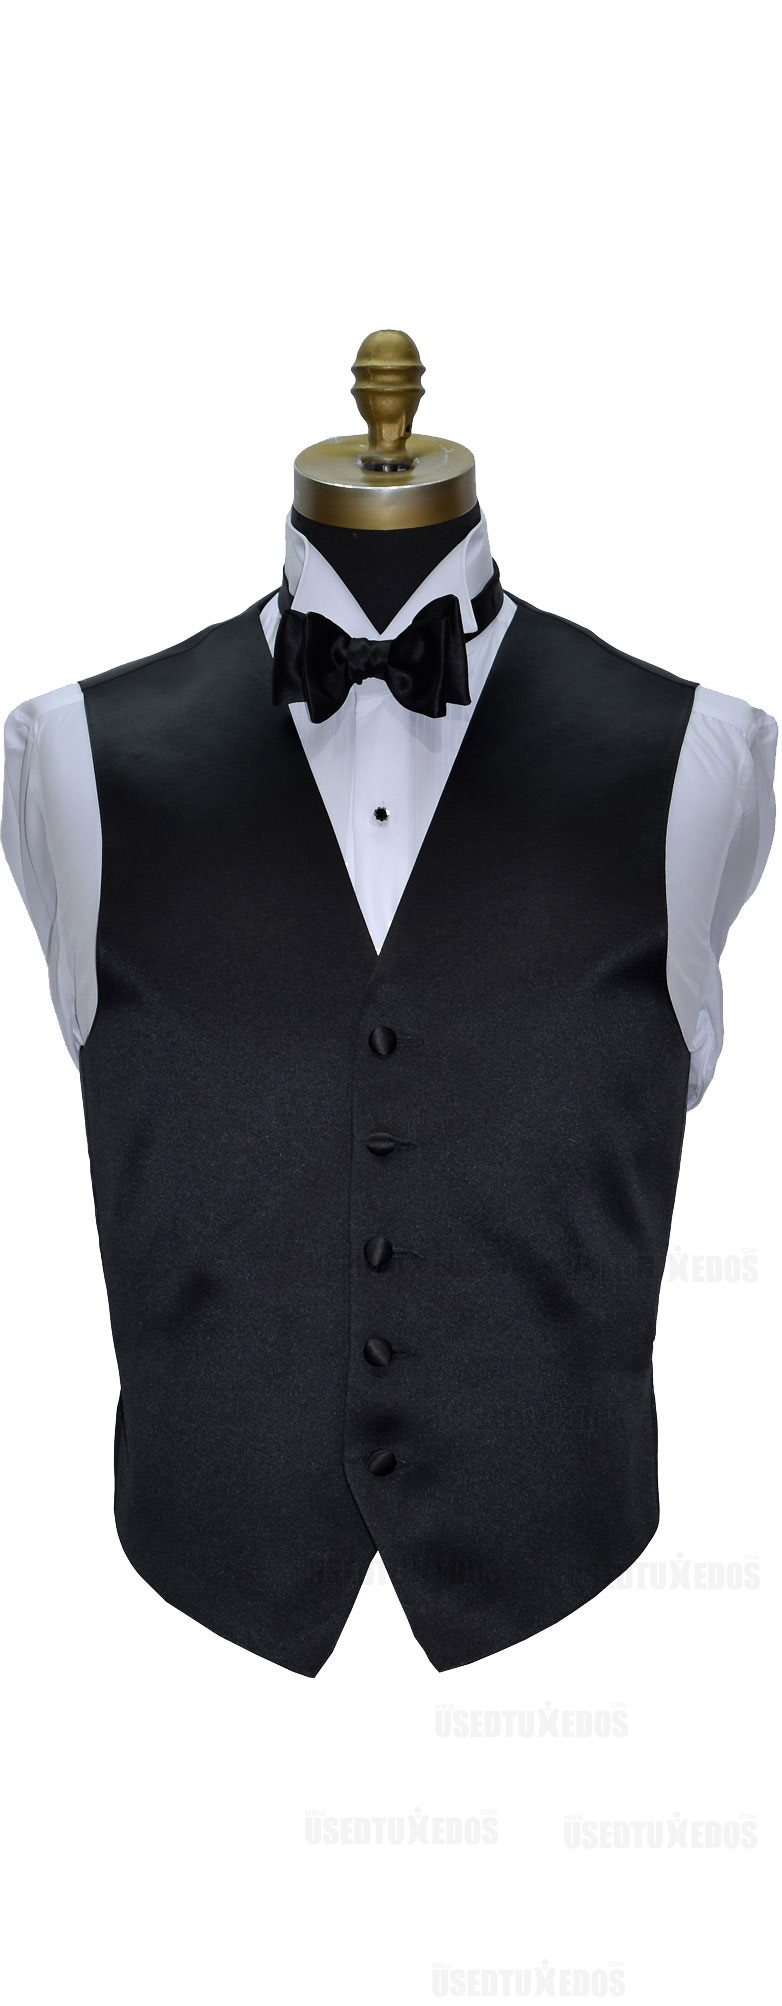 men's black satin tuxedo vest with black bowtie